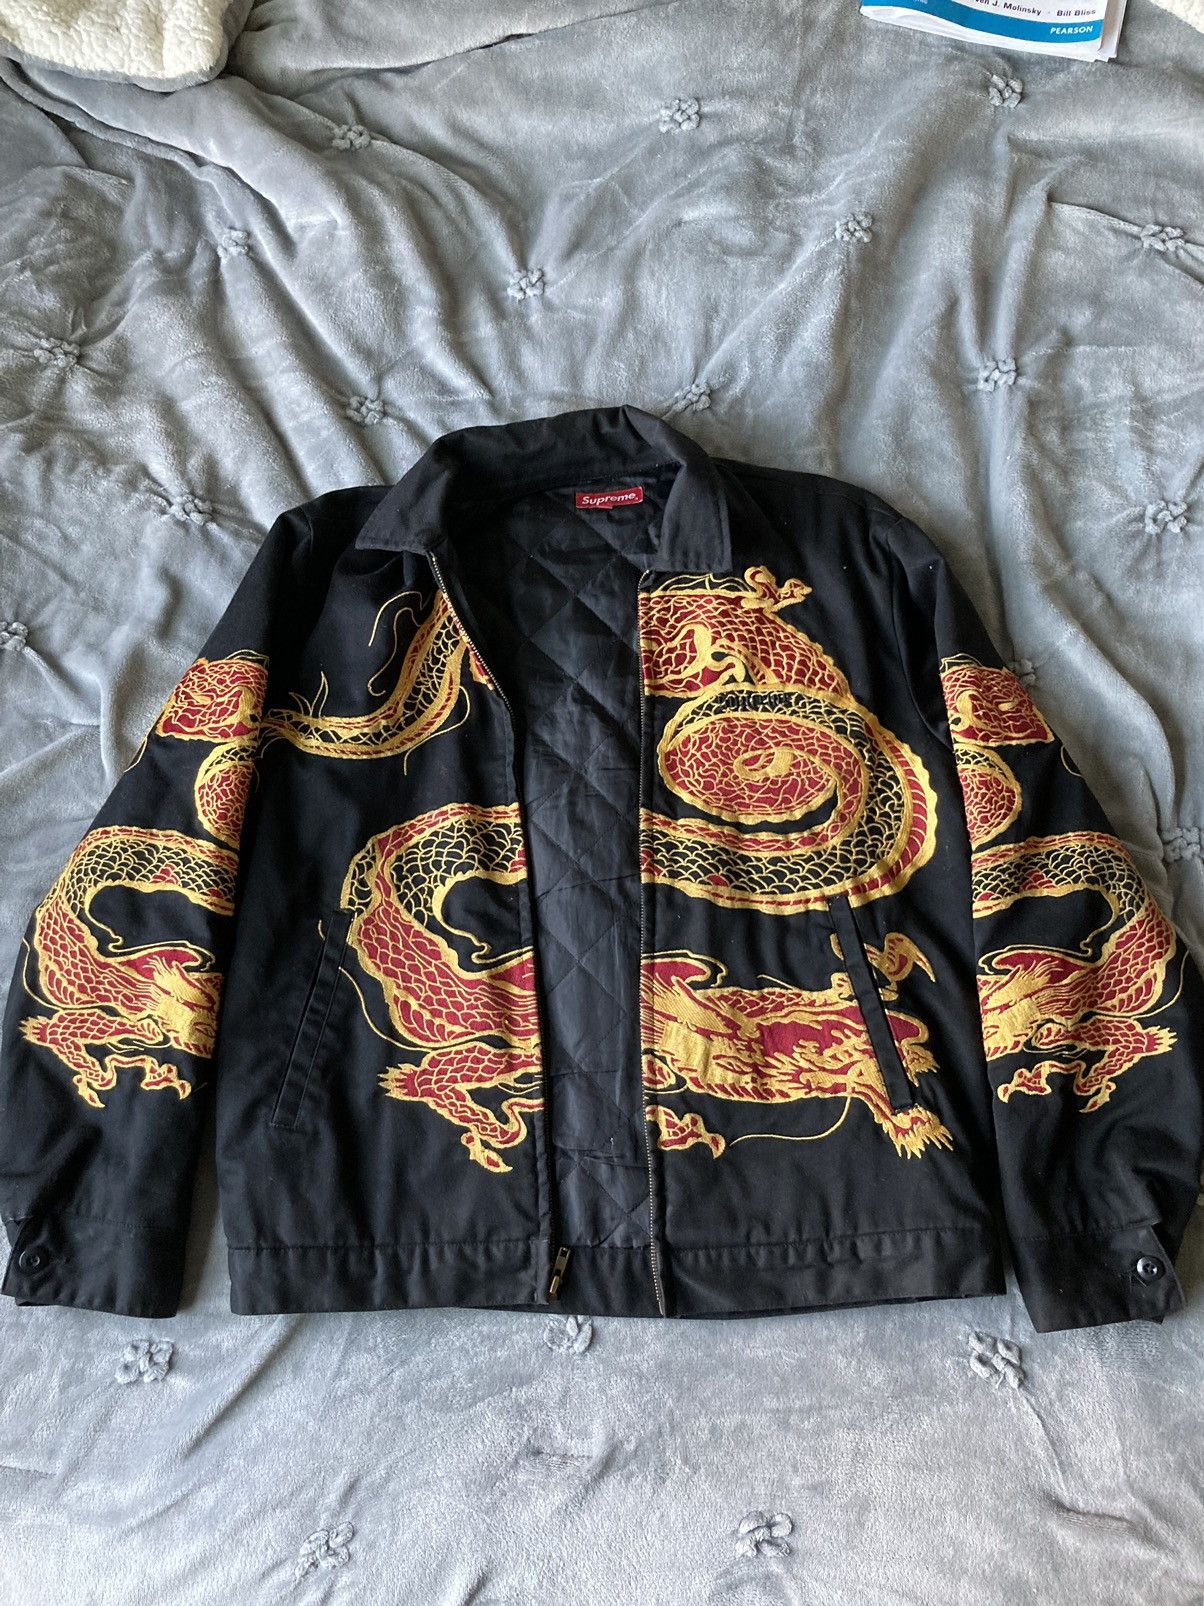 Supreme Supreme dragon work jacket | Grailed